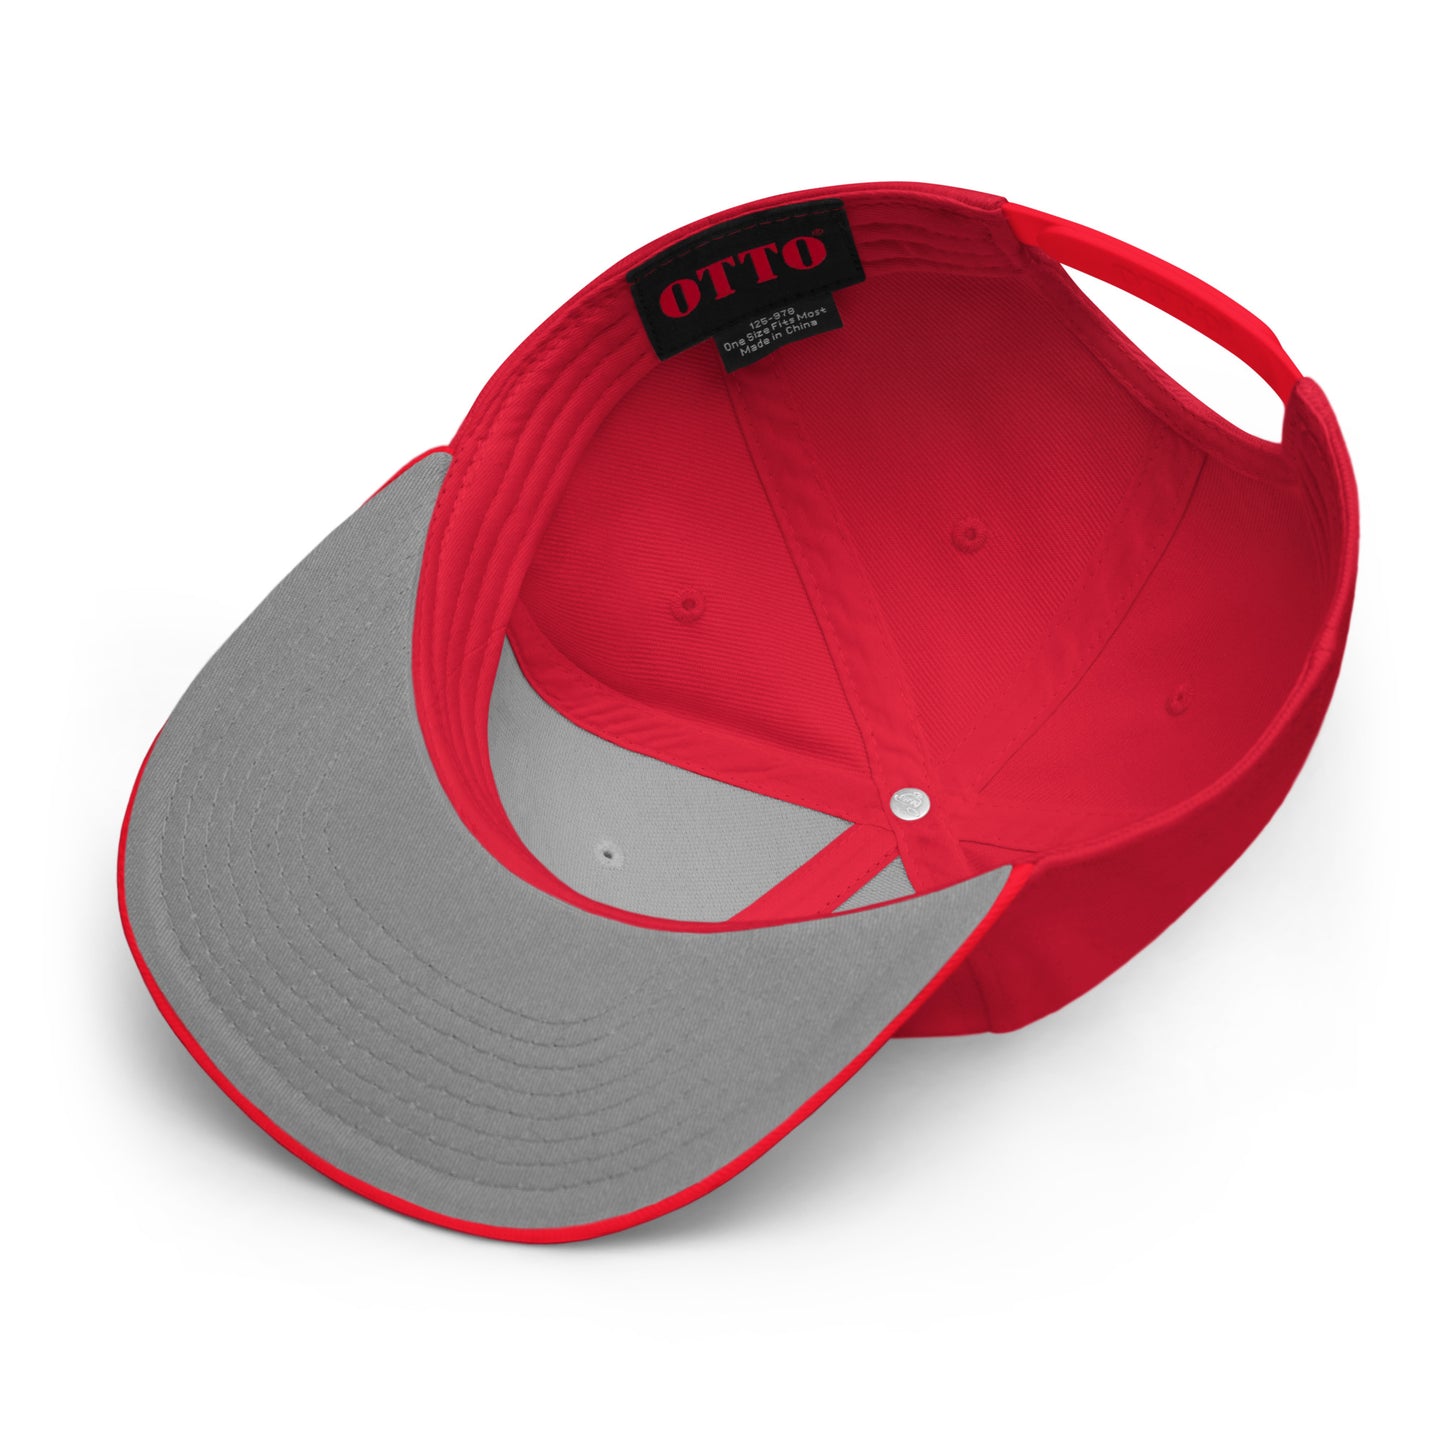 #47 Snapback "Style B" Hat